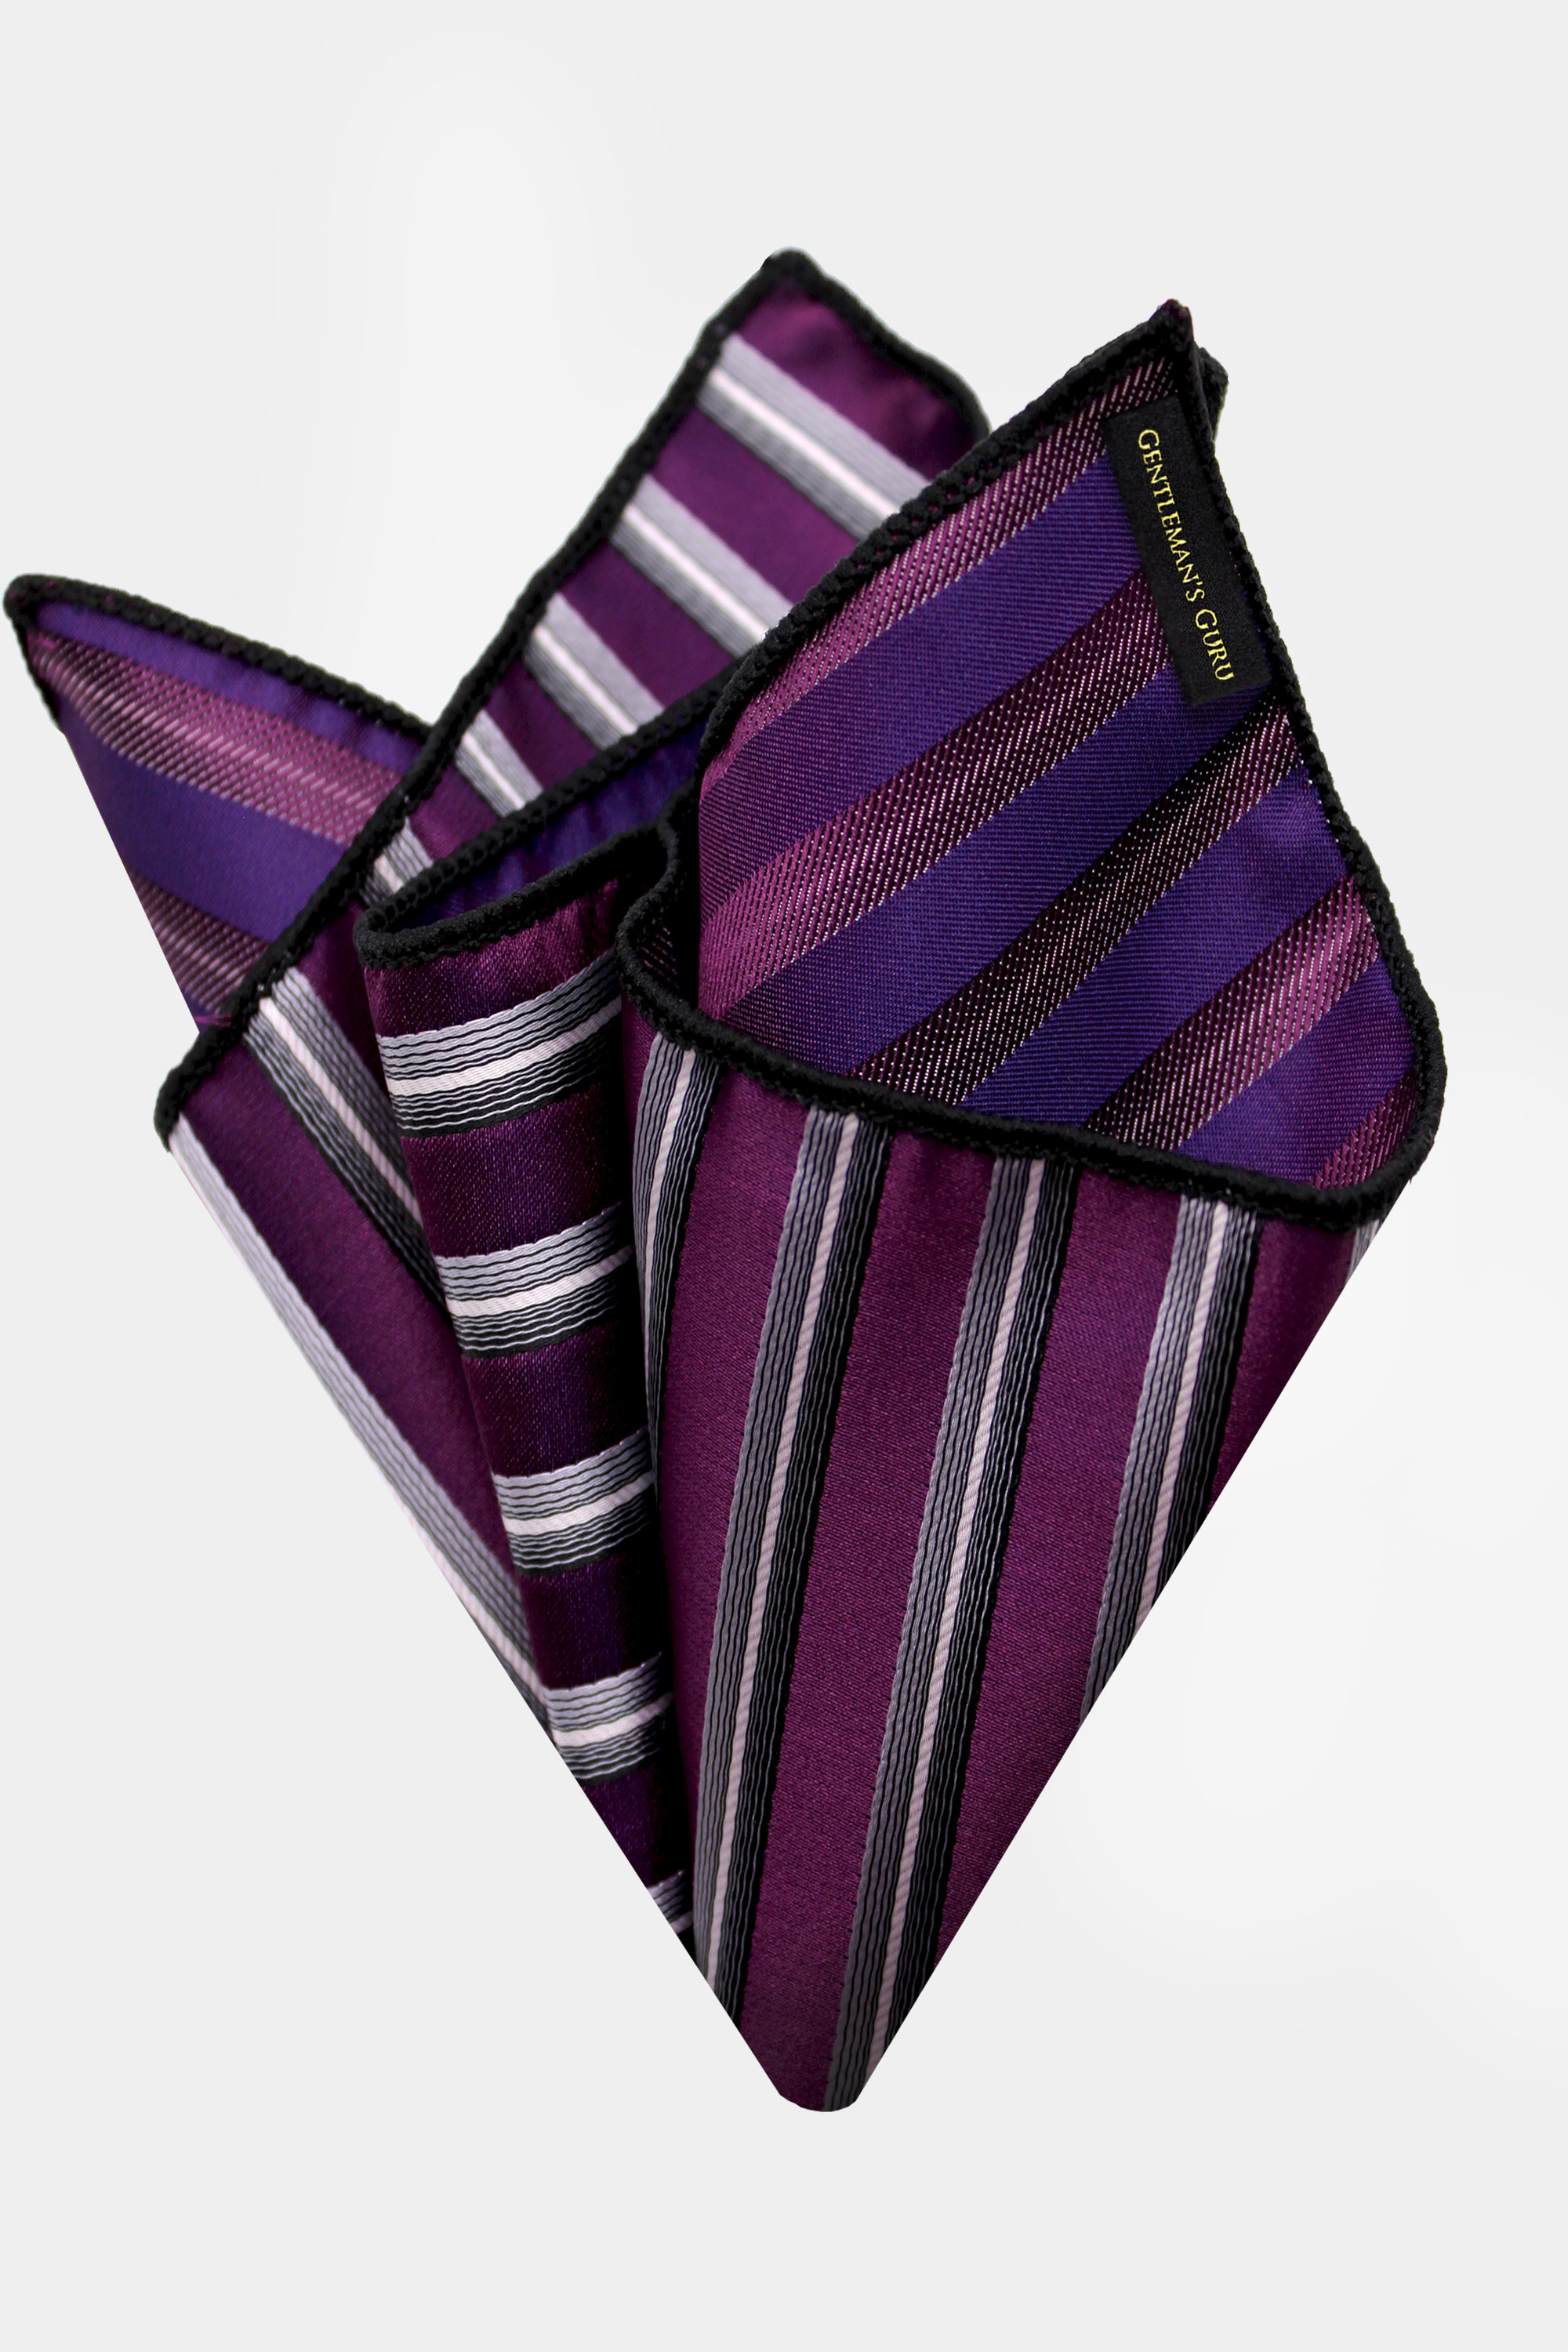 Purple-Striped-Pocket-Square-Handkerchief-from-Gentlemansguru.com